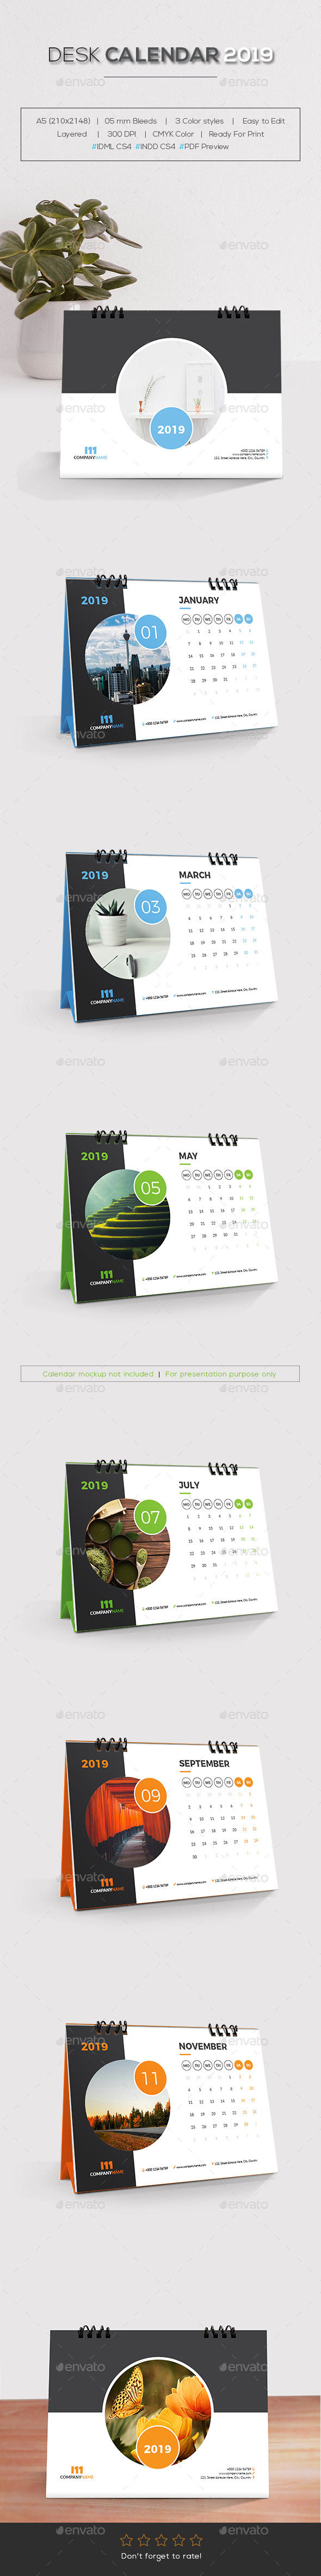 indd pdf imdl CS4 preview desk calendar 2019 calendar design Moderne simple